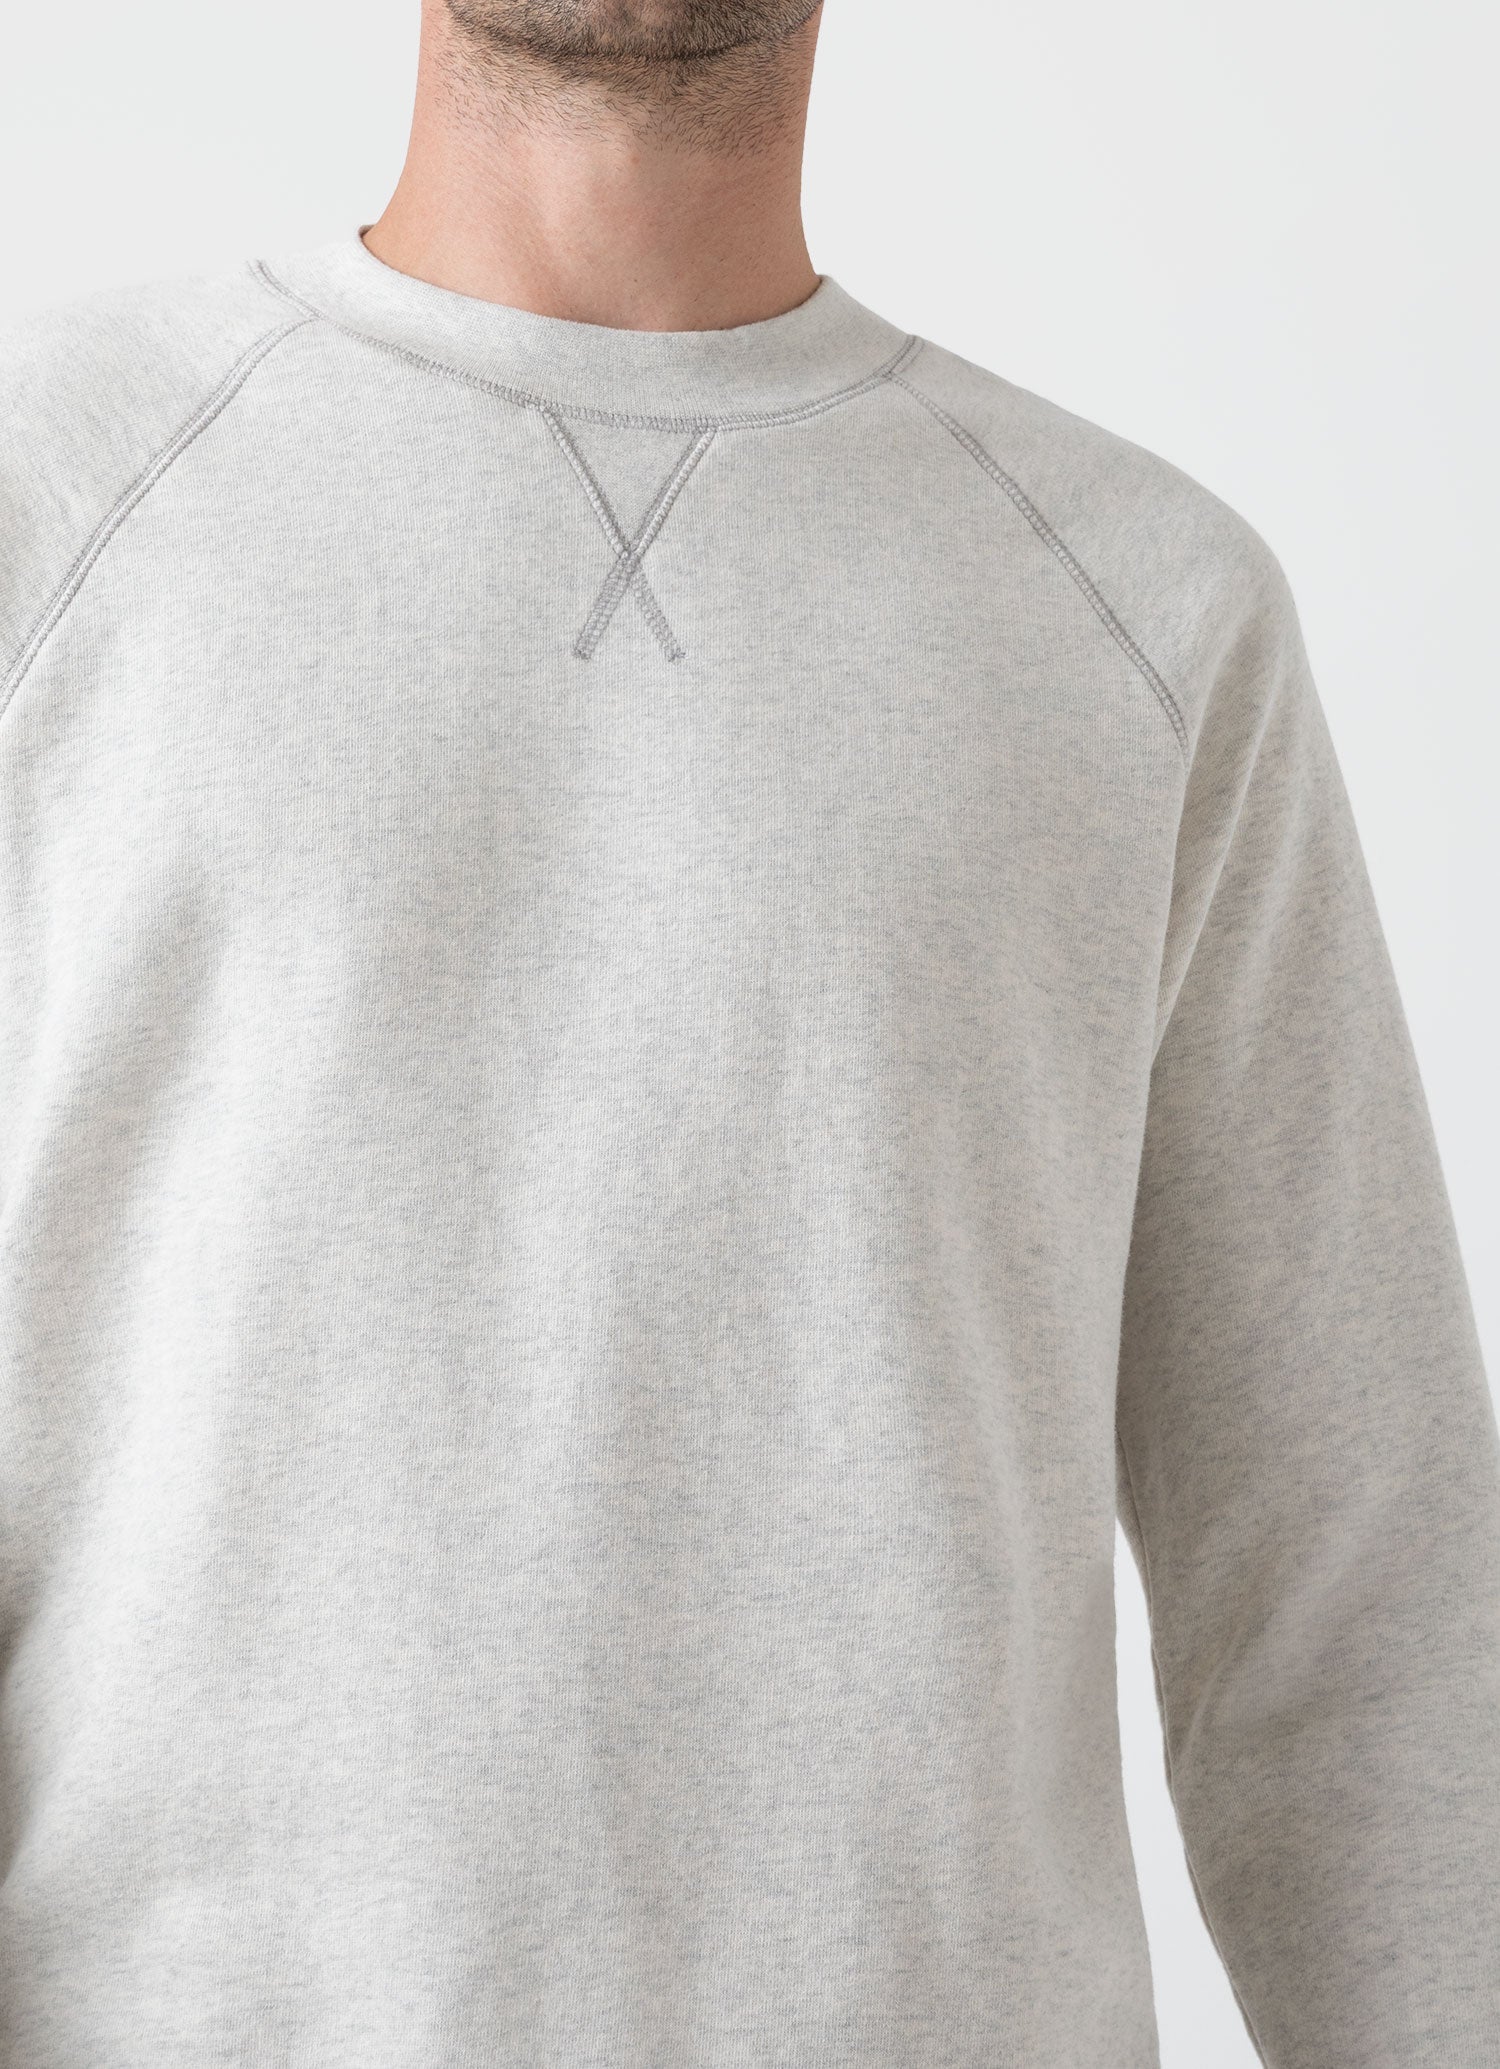 Men's Fleeceback Sweatshirt in Archive White Melange